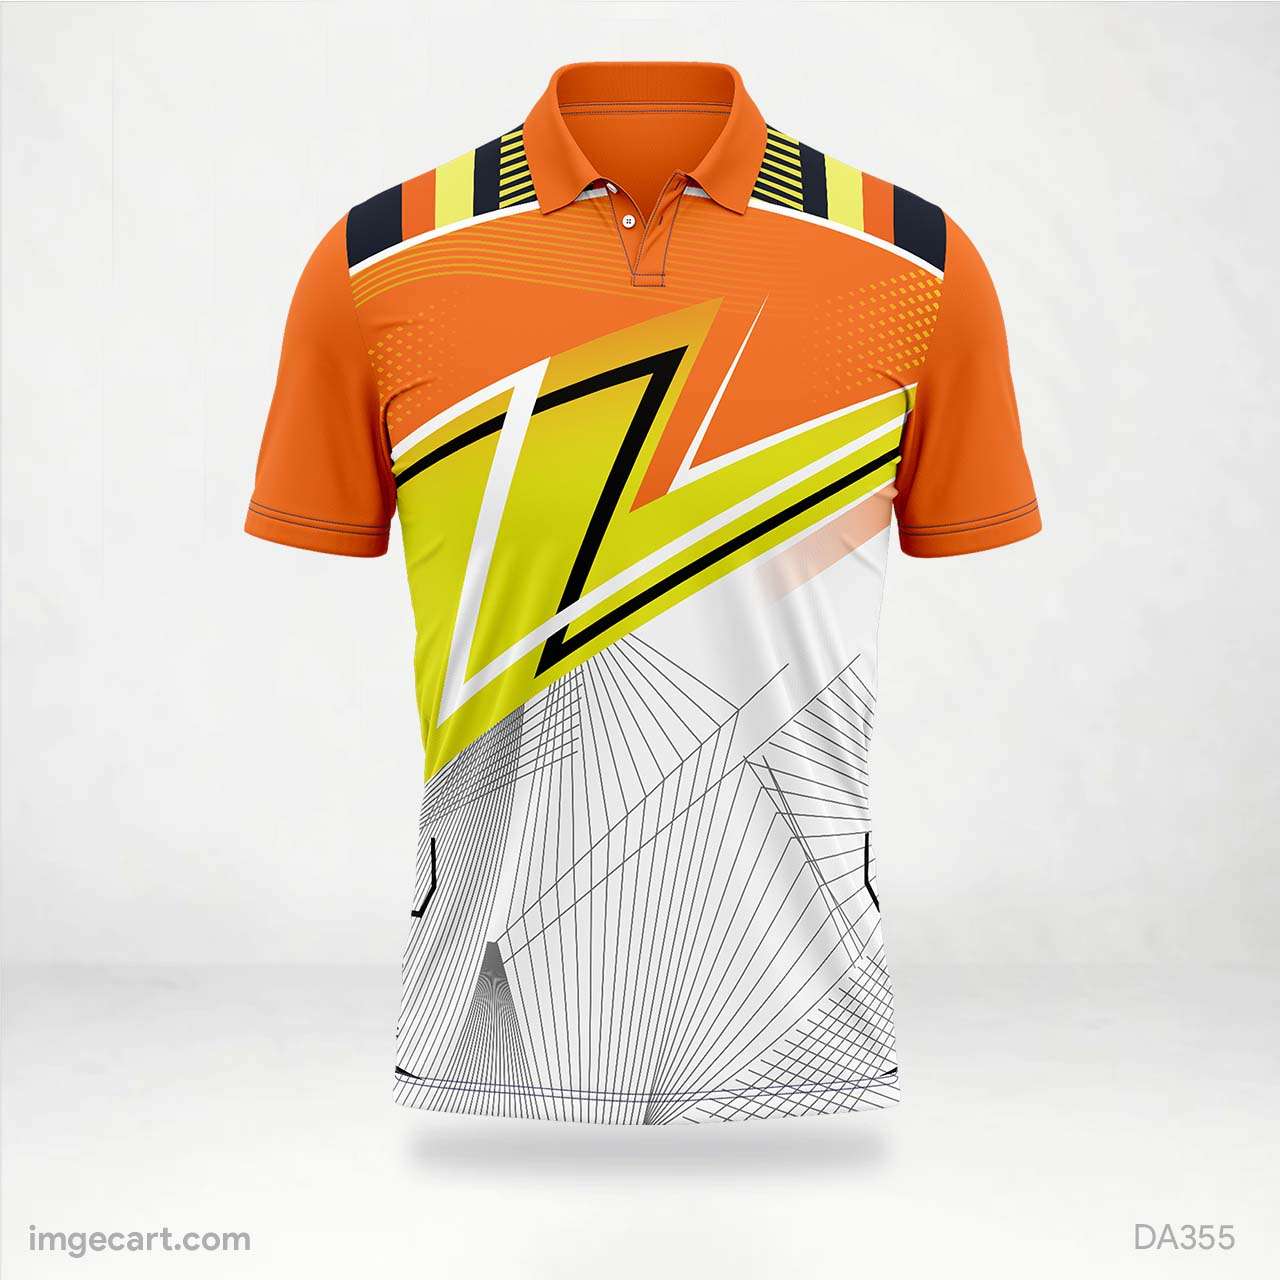 E-sports Jersey Design Orange and Yellow - imgecart